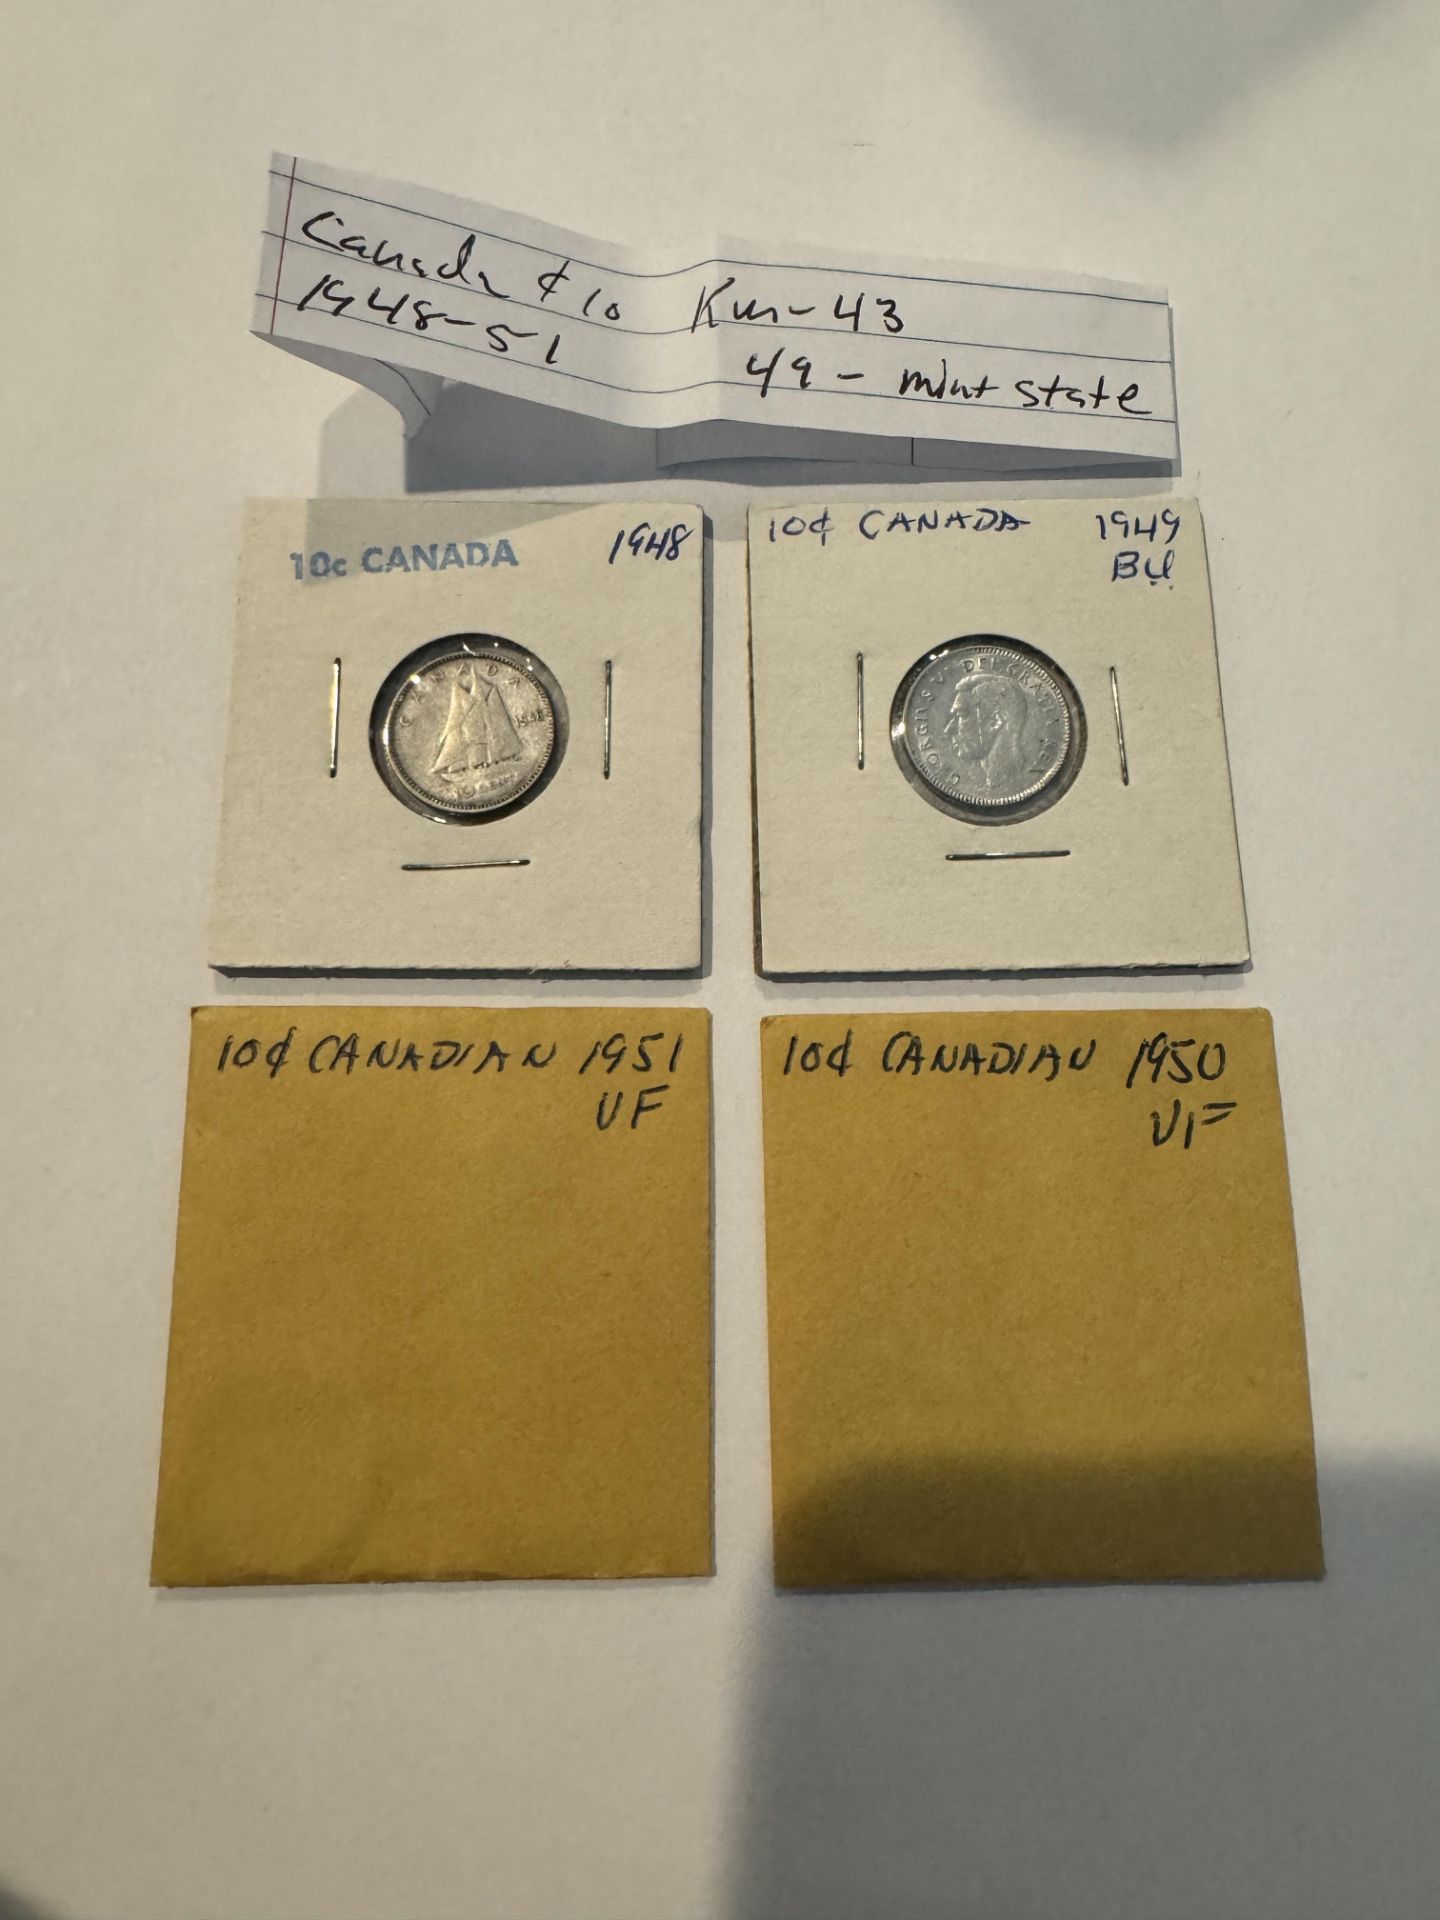 Canada 10 cent silver coin (1948 / 1949)